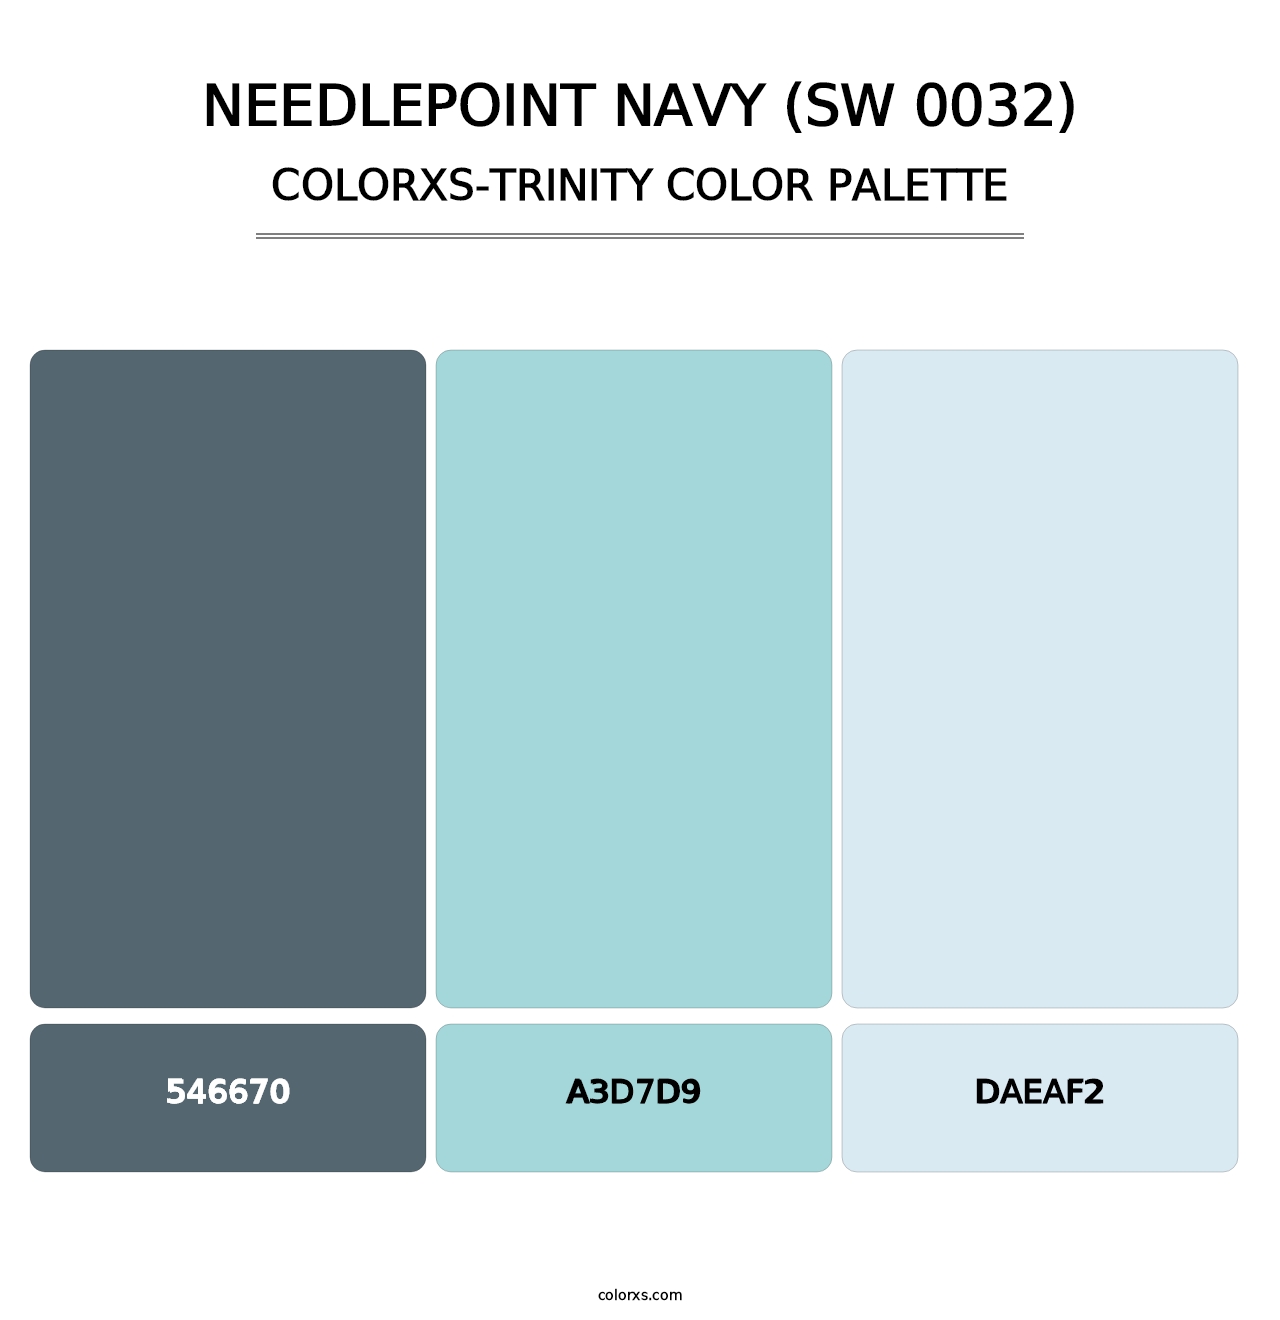 Needlepoint Navy (SW 0032) - Colorxs Trinity Palette